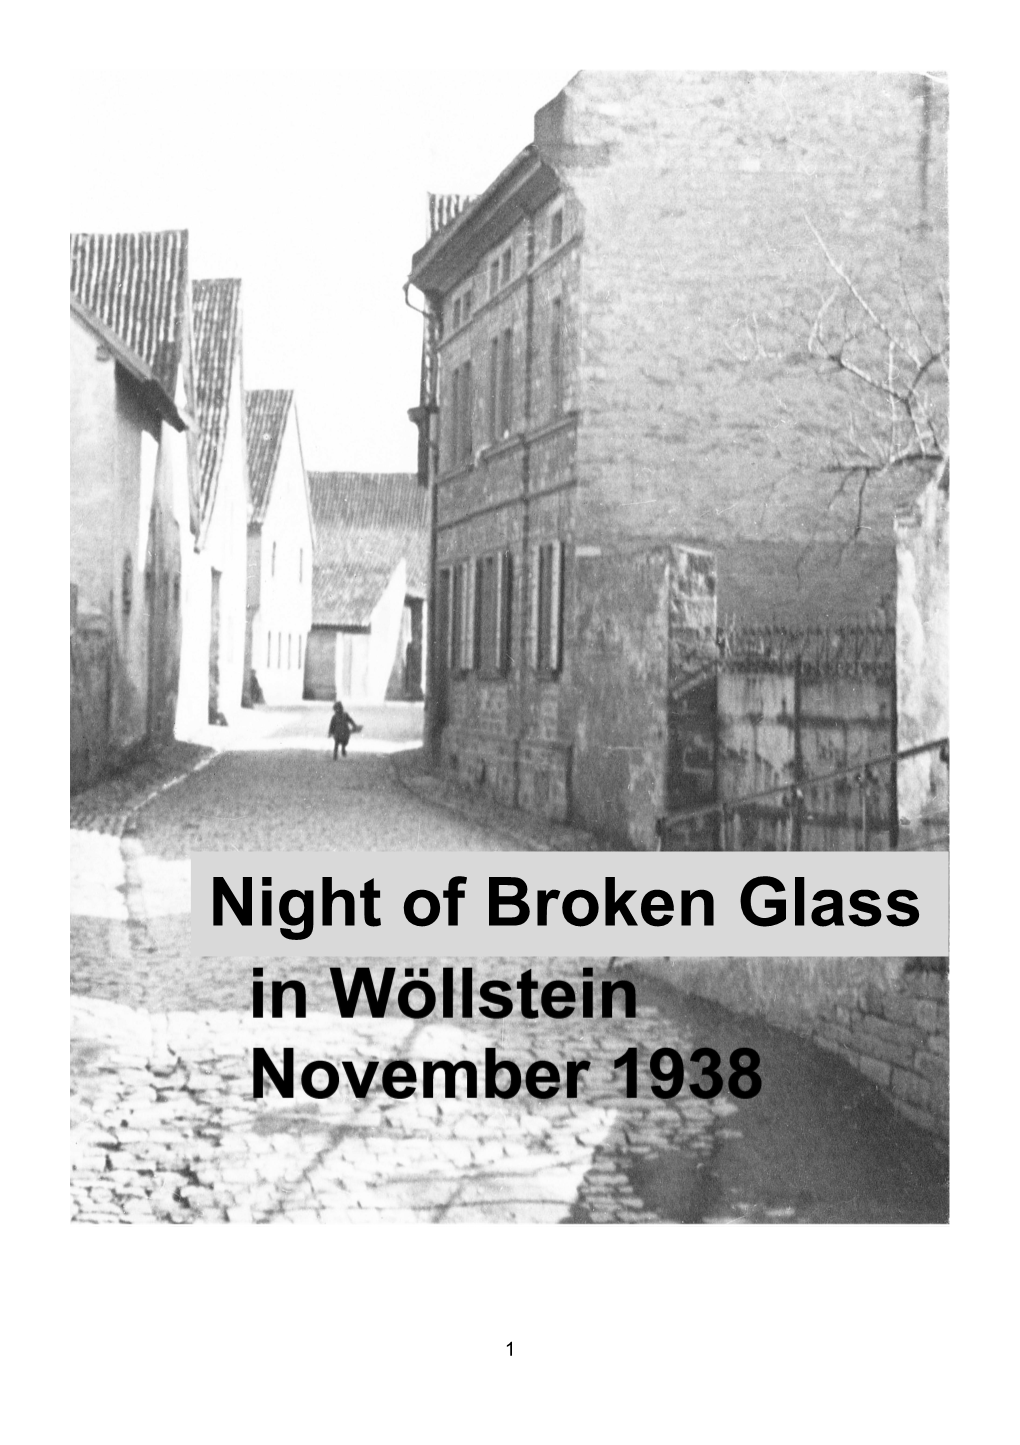 Night of Broken Glass November 1938 in Wöllstein